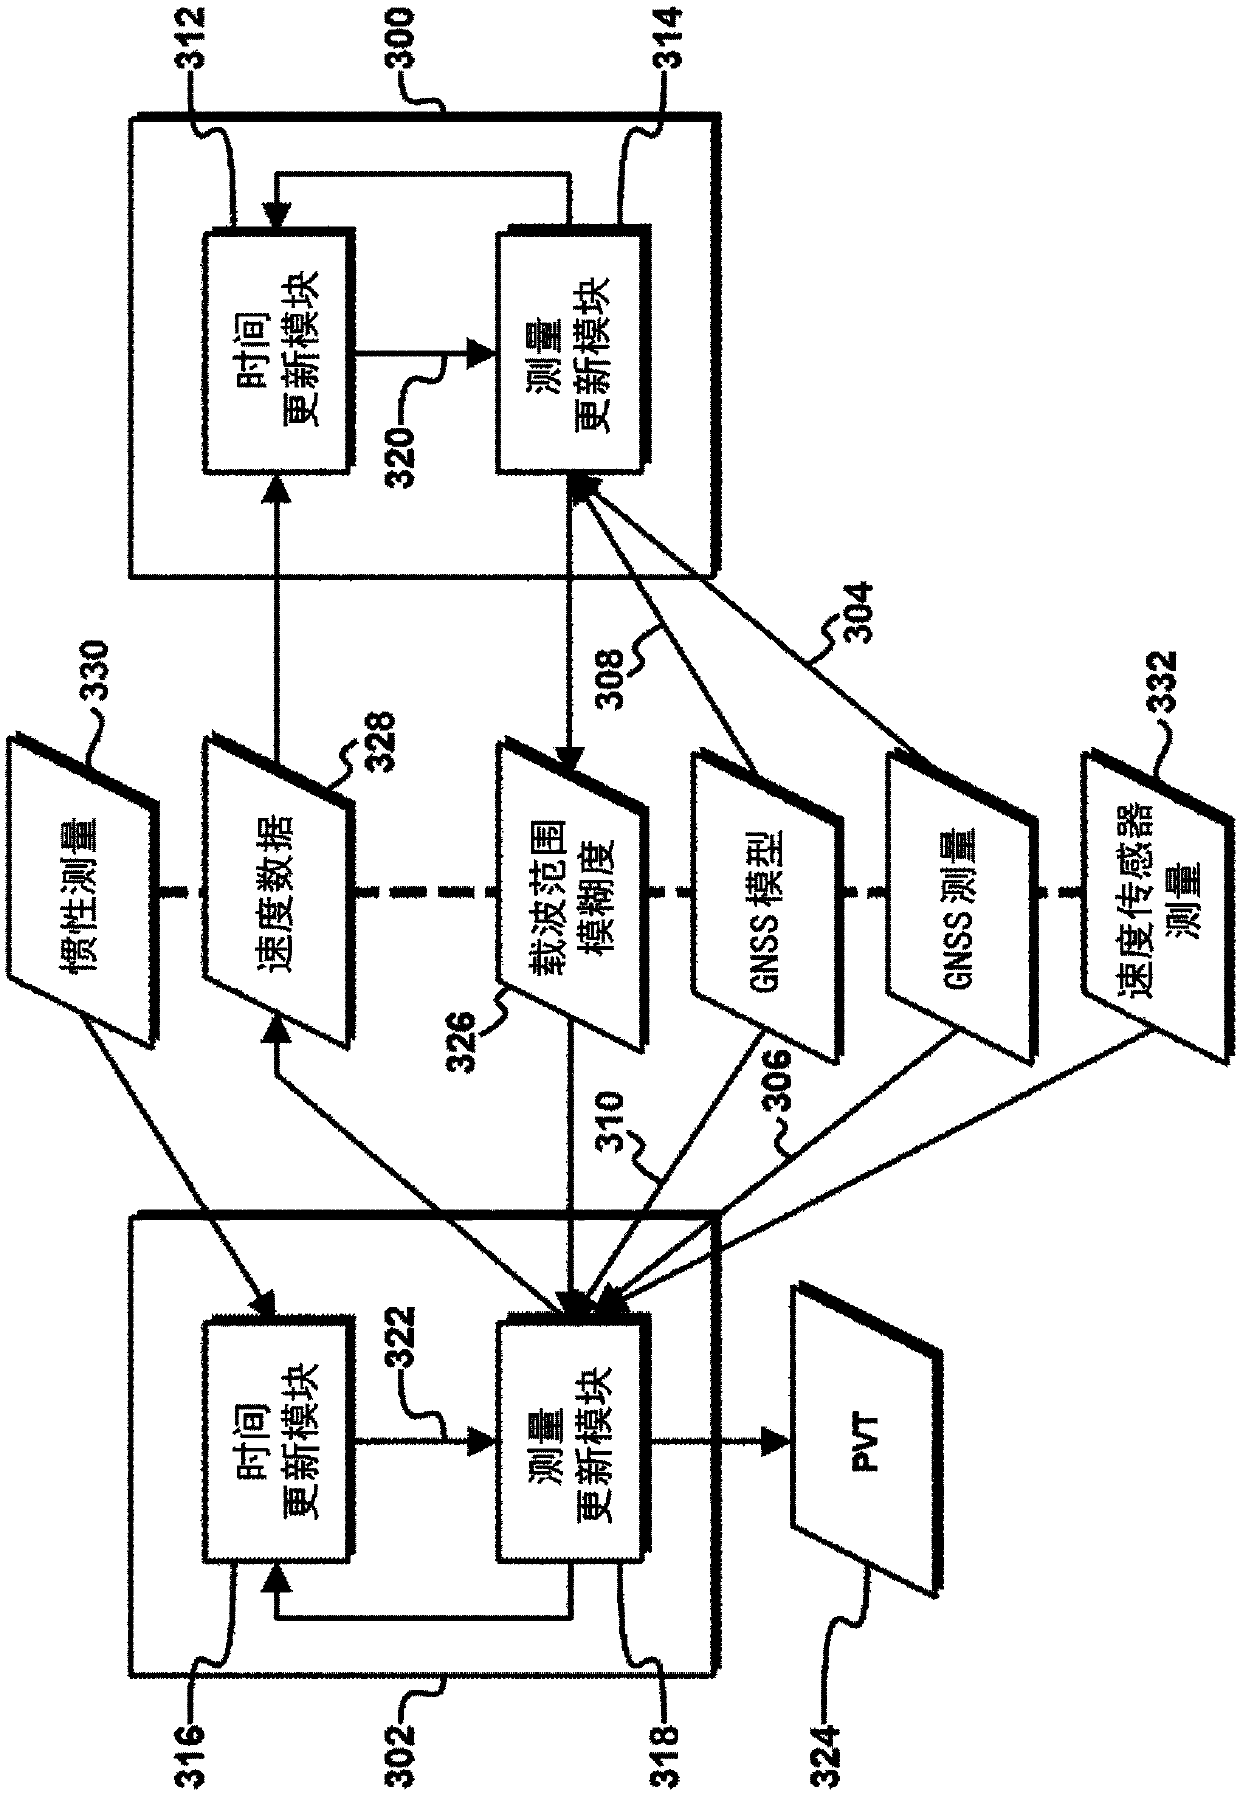 Distributed kalman filter architecture for carrier range ambiguity estimation